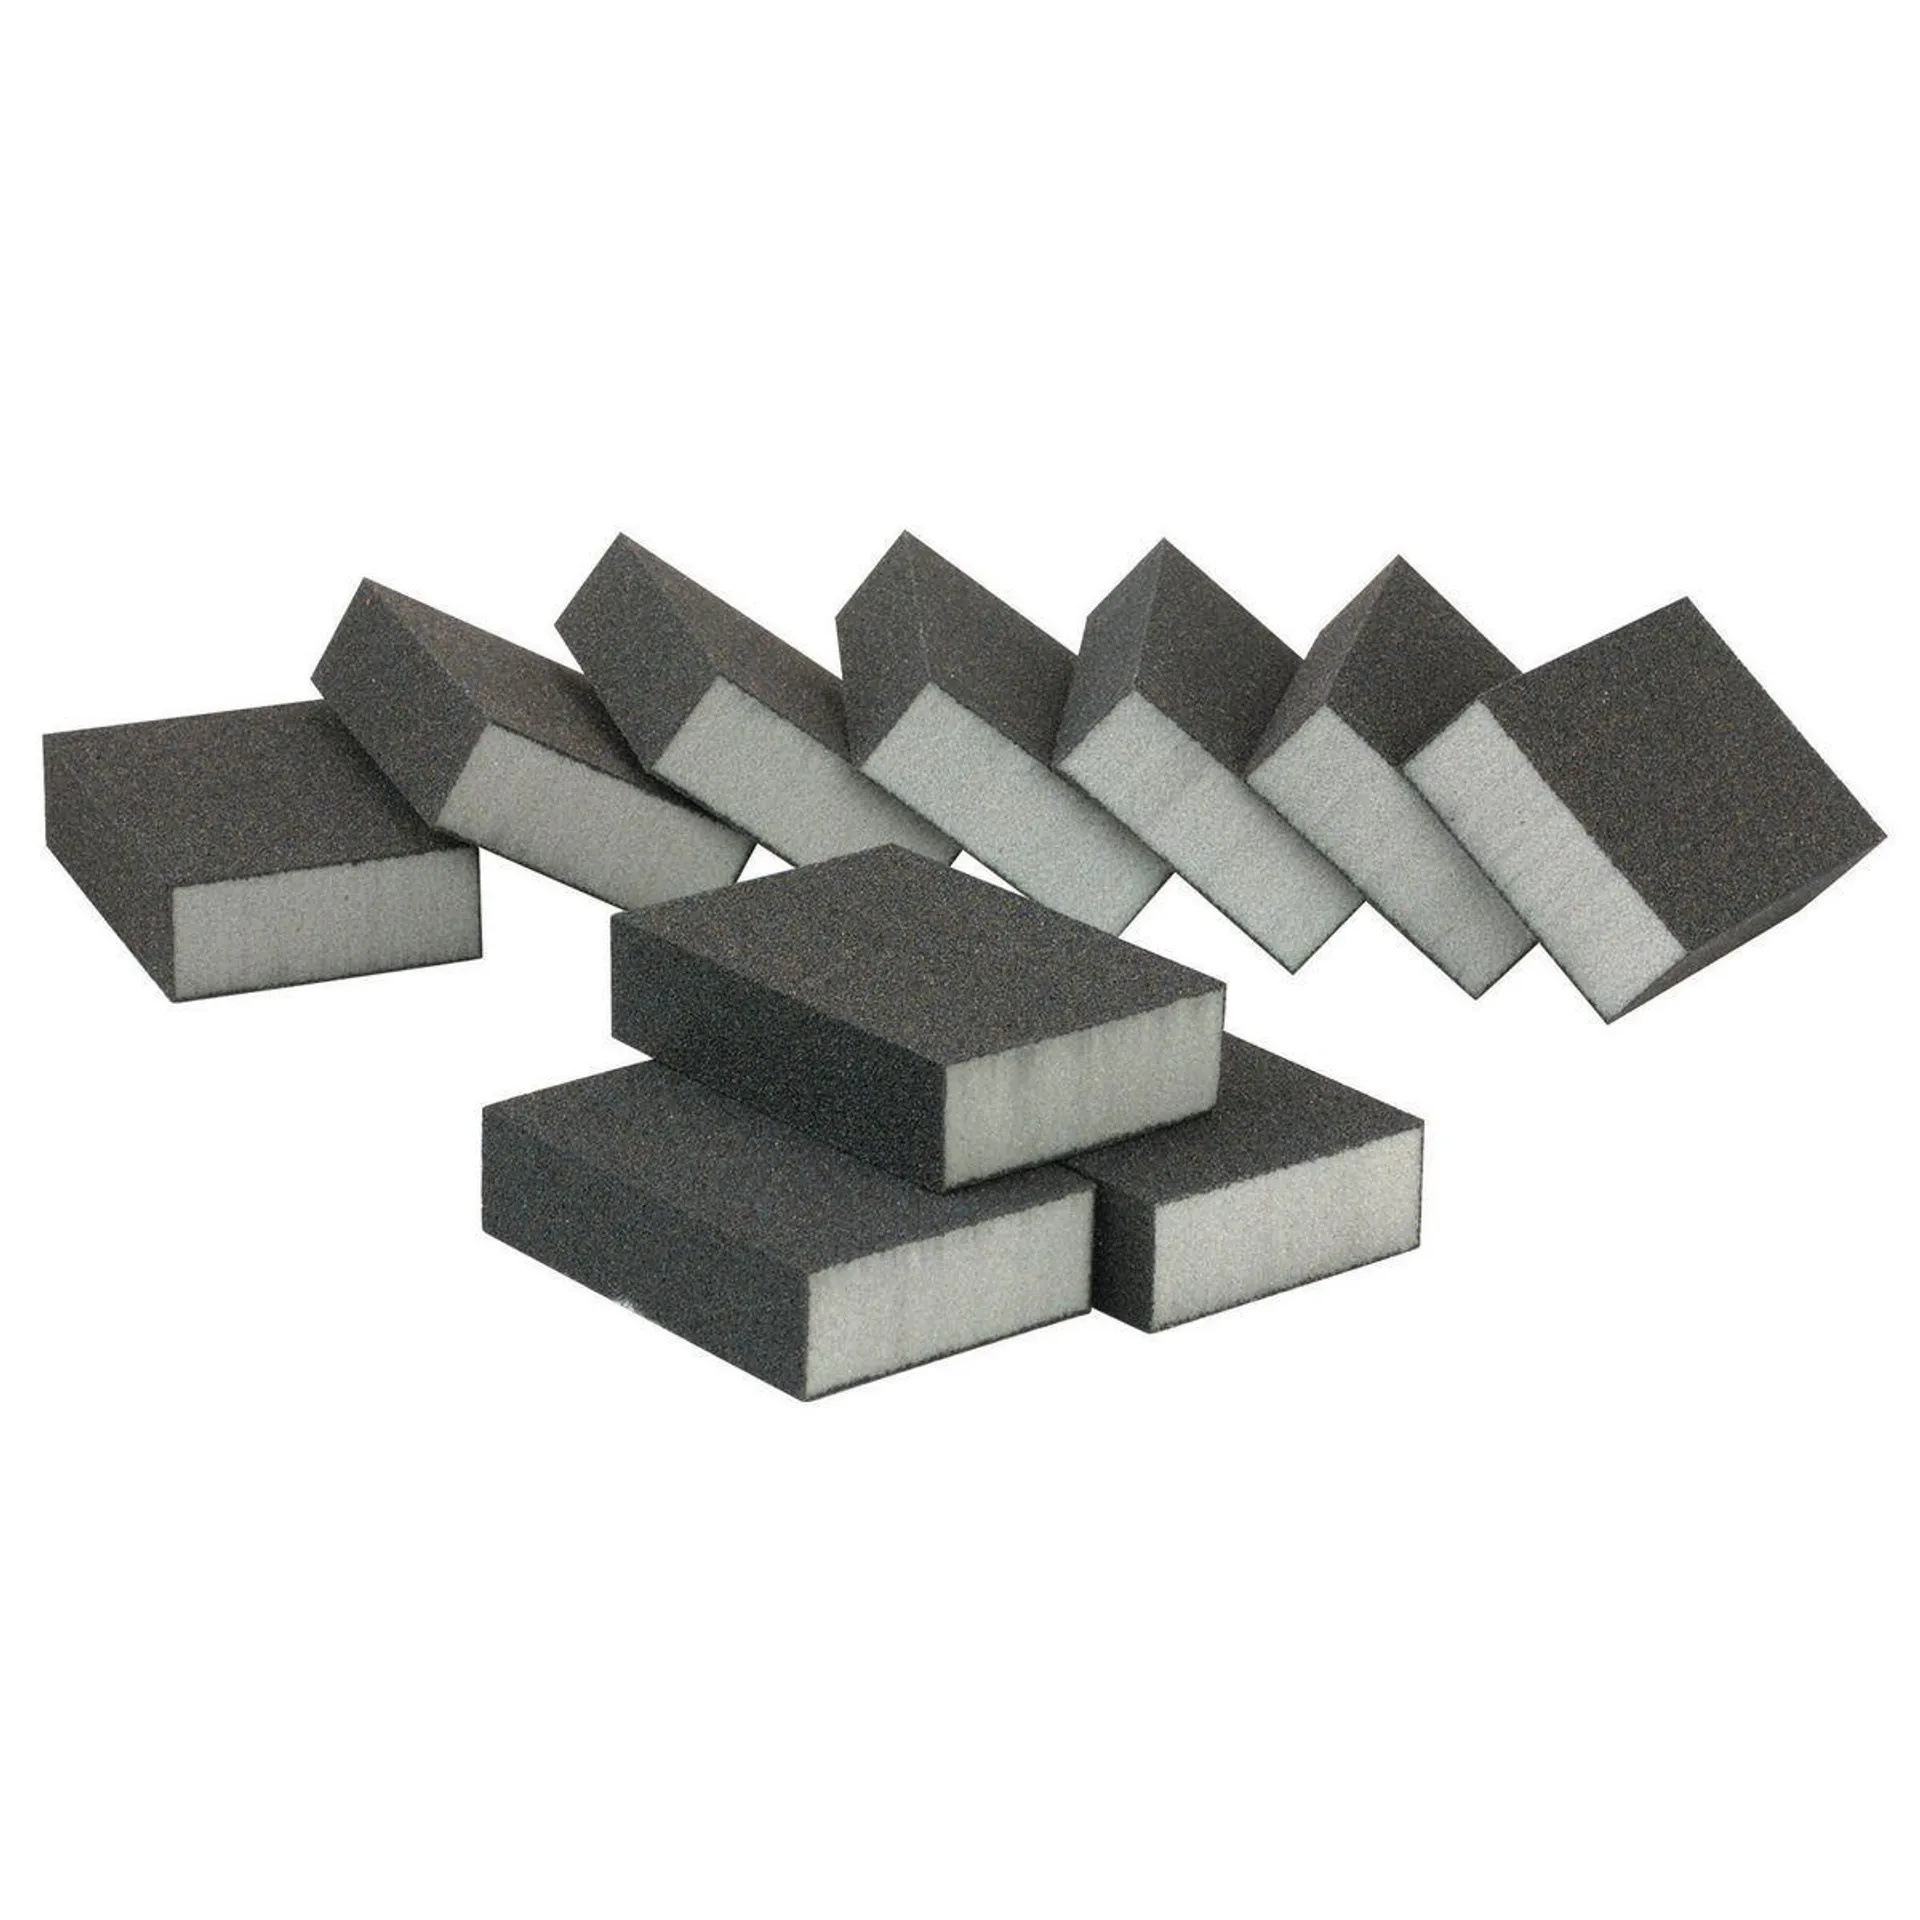 Aluminum Oxide Sanding Sponges - Coarse Grade, 10 Pack